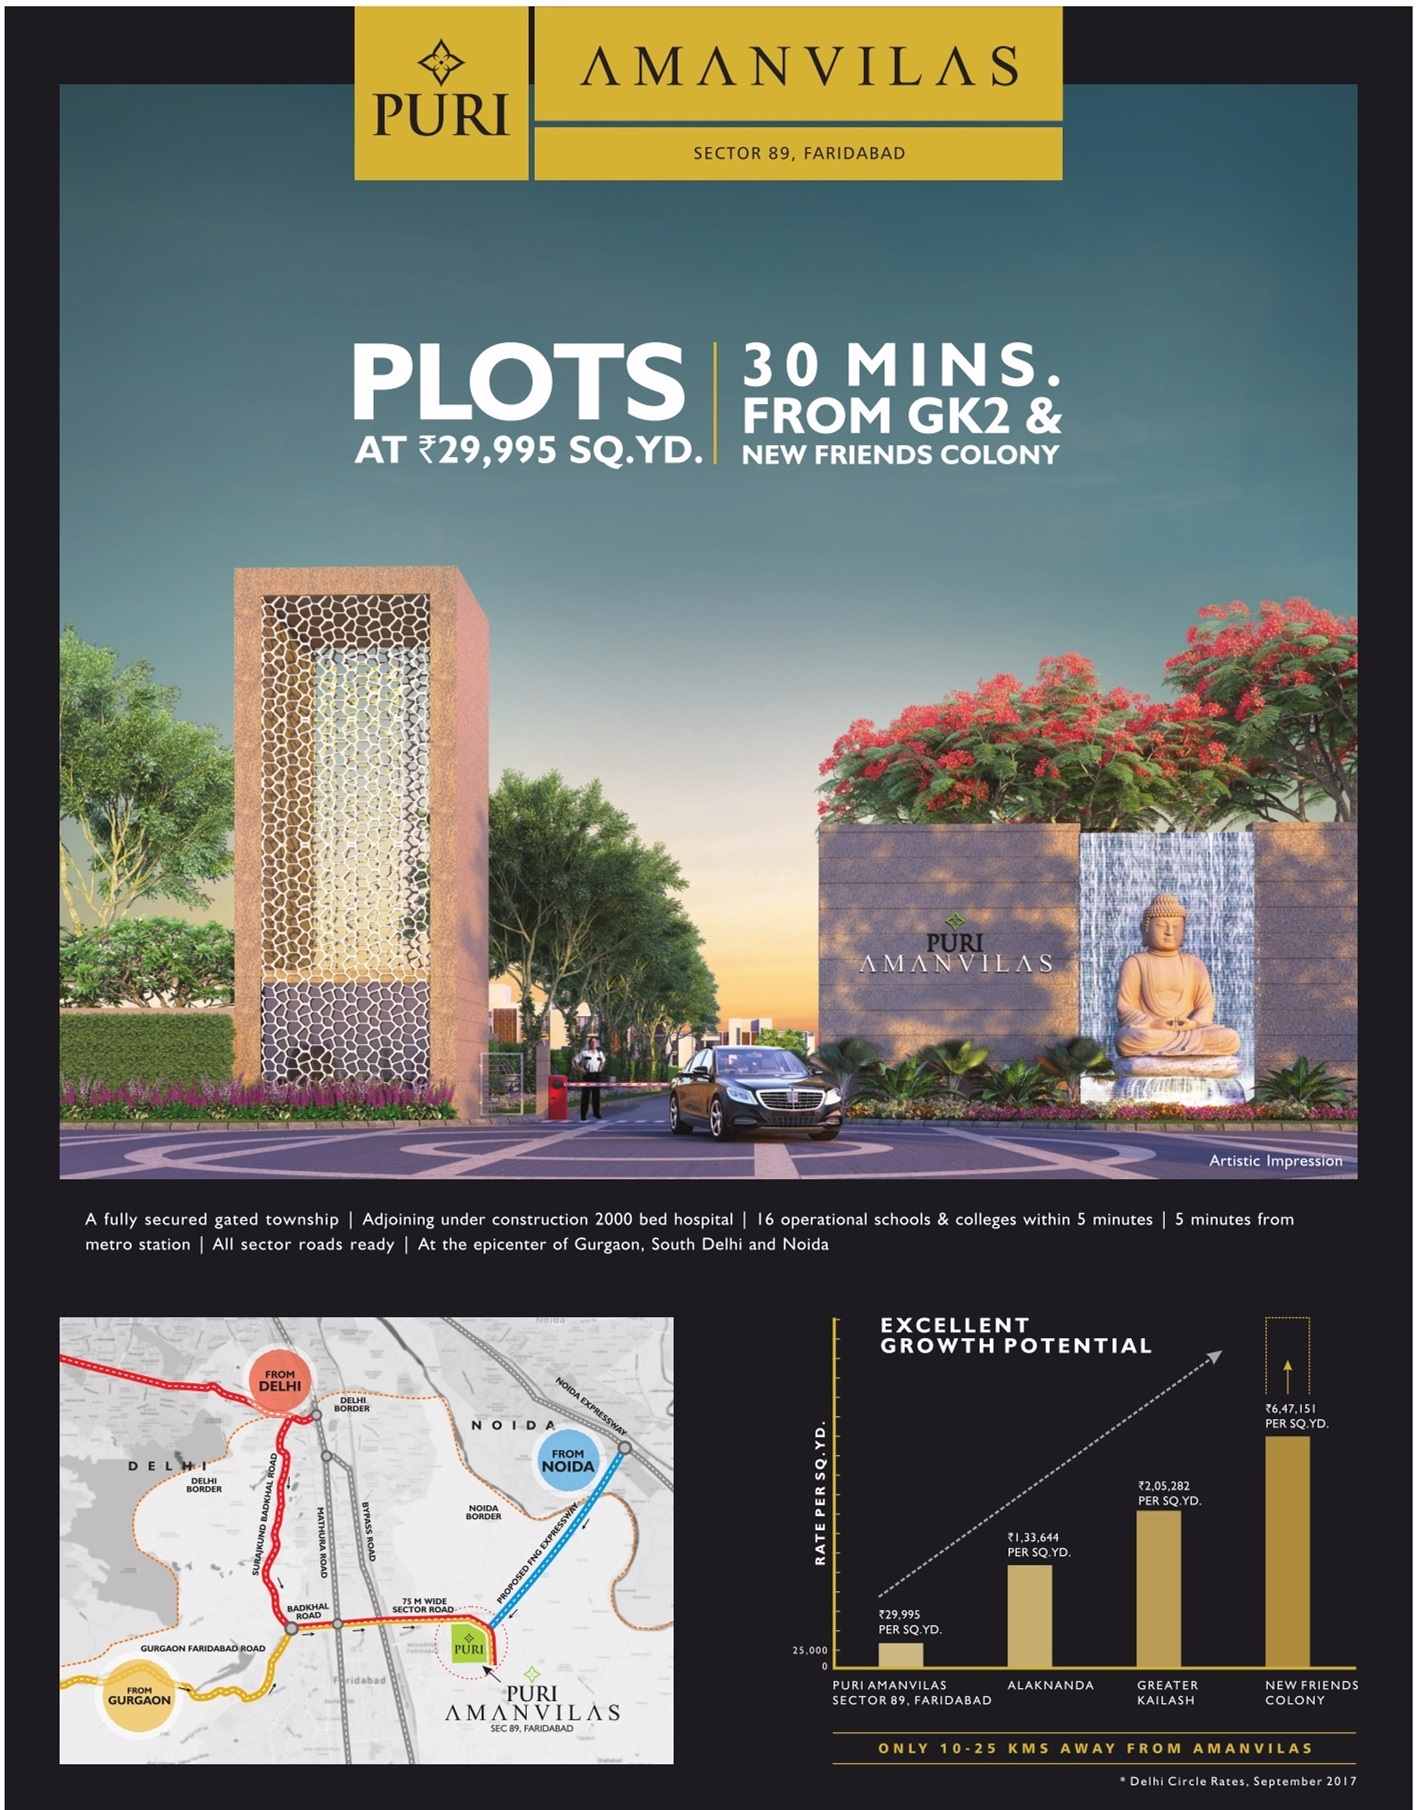 Puri Amanvilas presents residential plots @ 29,995 sq. yd. in Faridabad Update